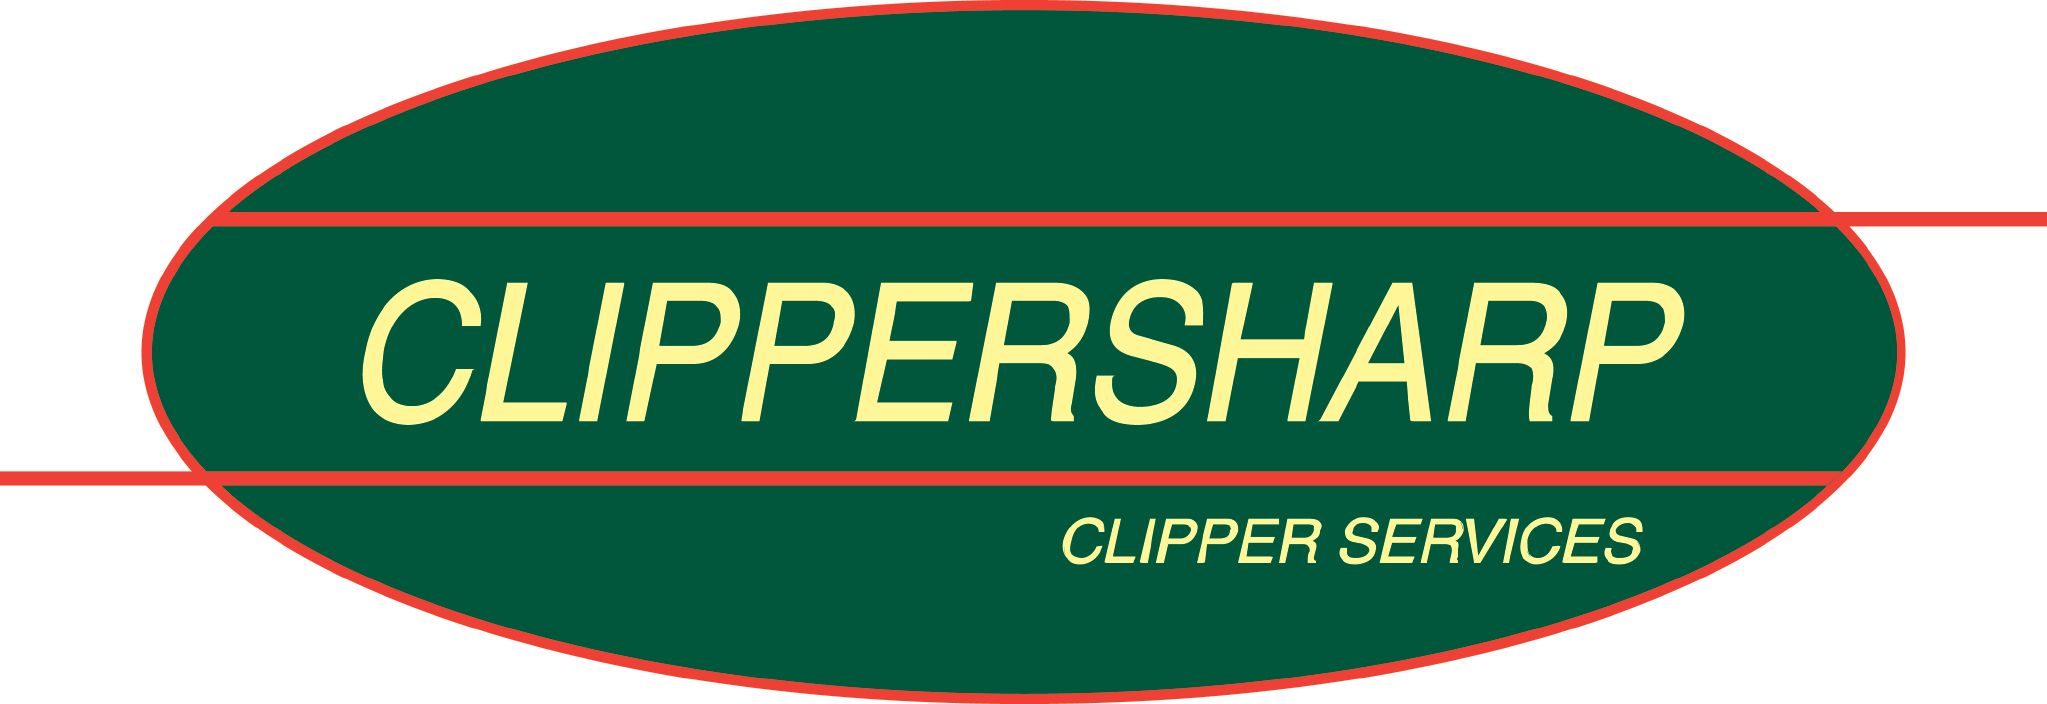 Clippersharp logo